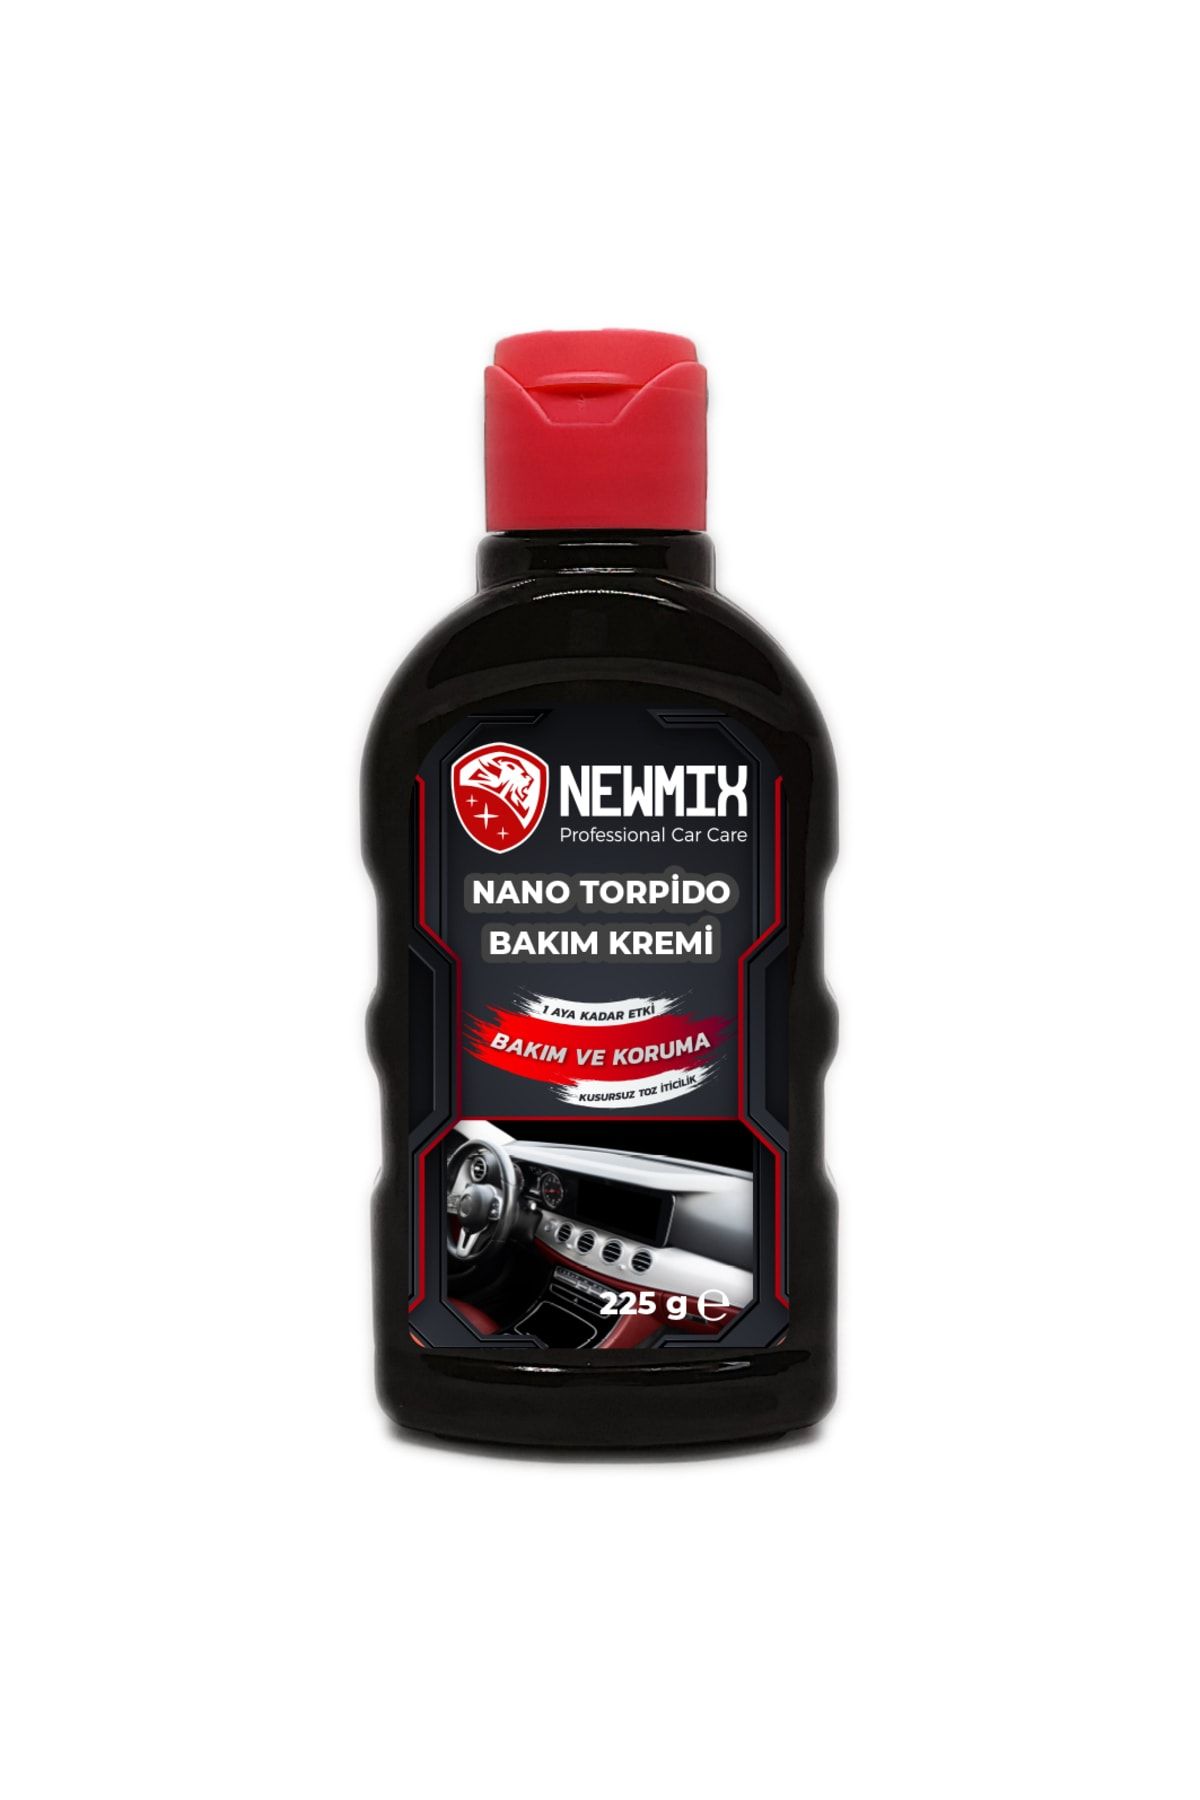 Newmix Newmix Torpido Bakım Kremi Nano-225gr-